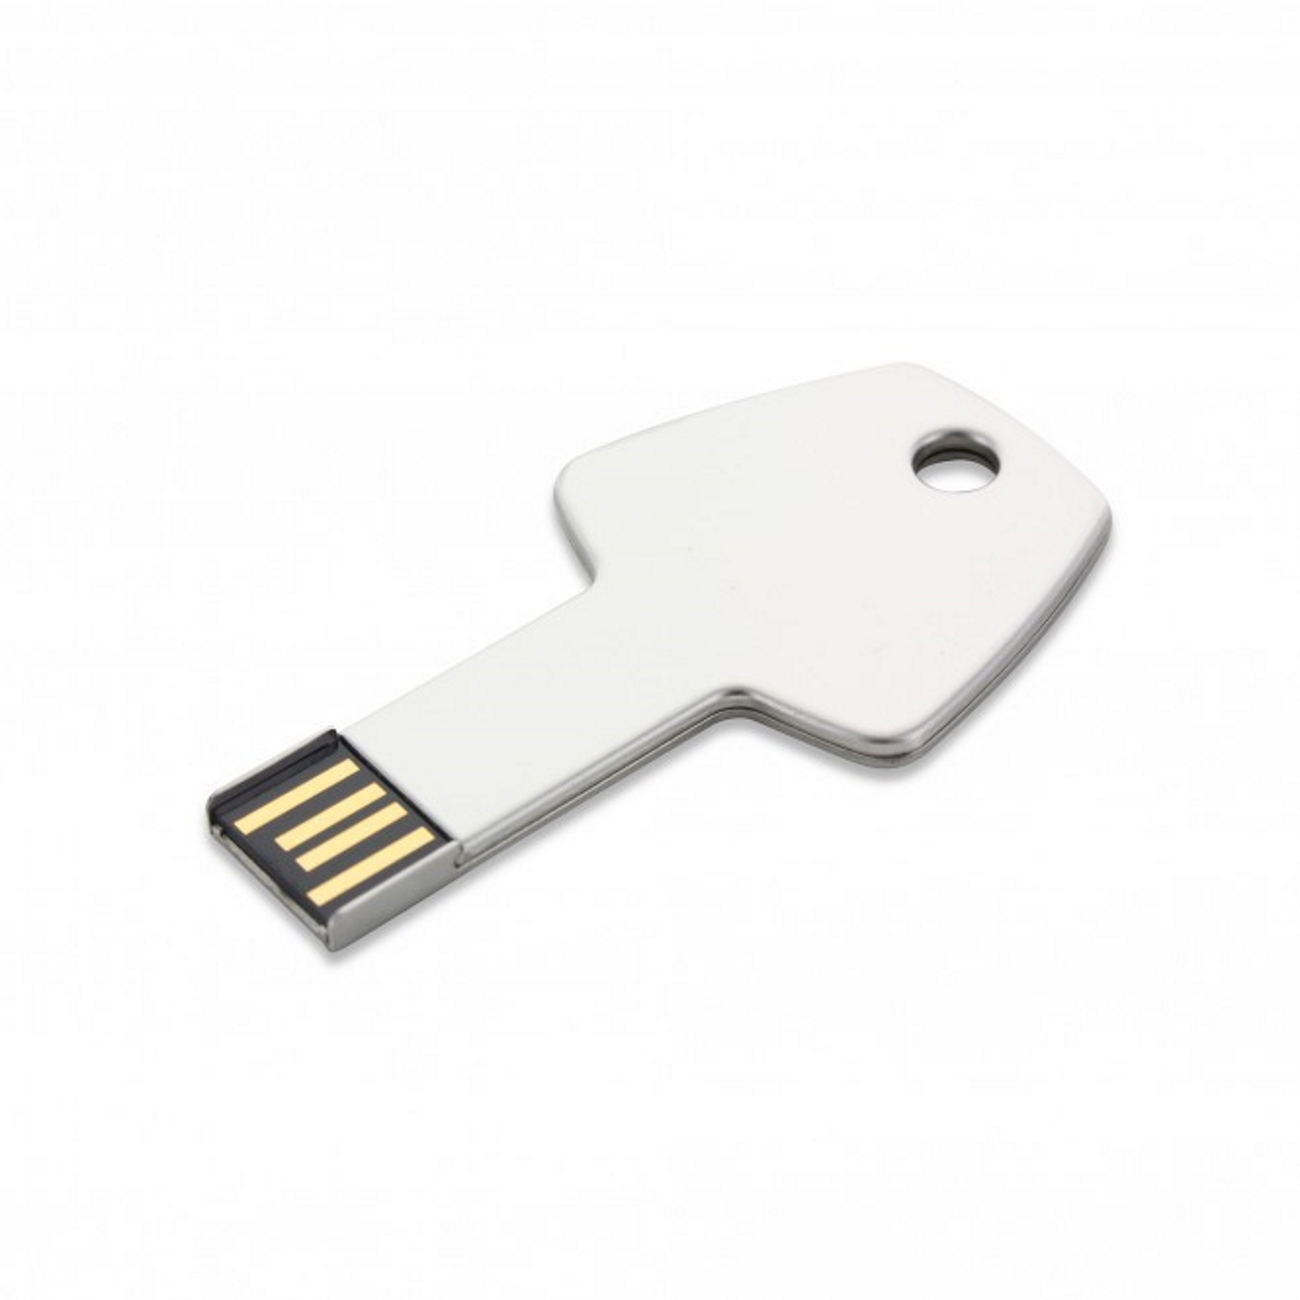 USB GERMANY ®Schlüssel GB) (Silber, 4 USB-Stick Key